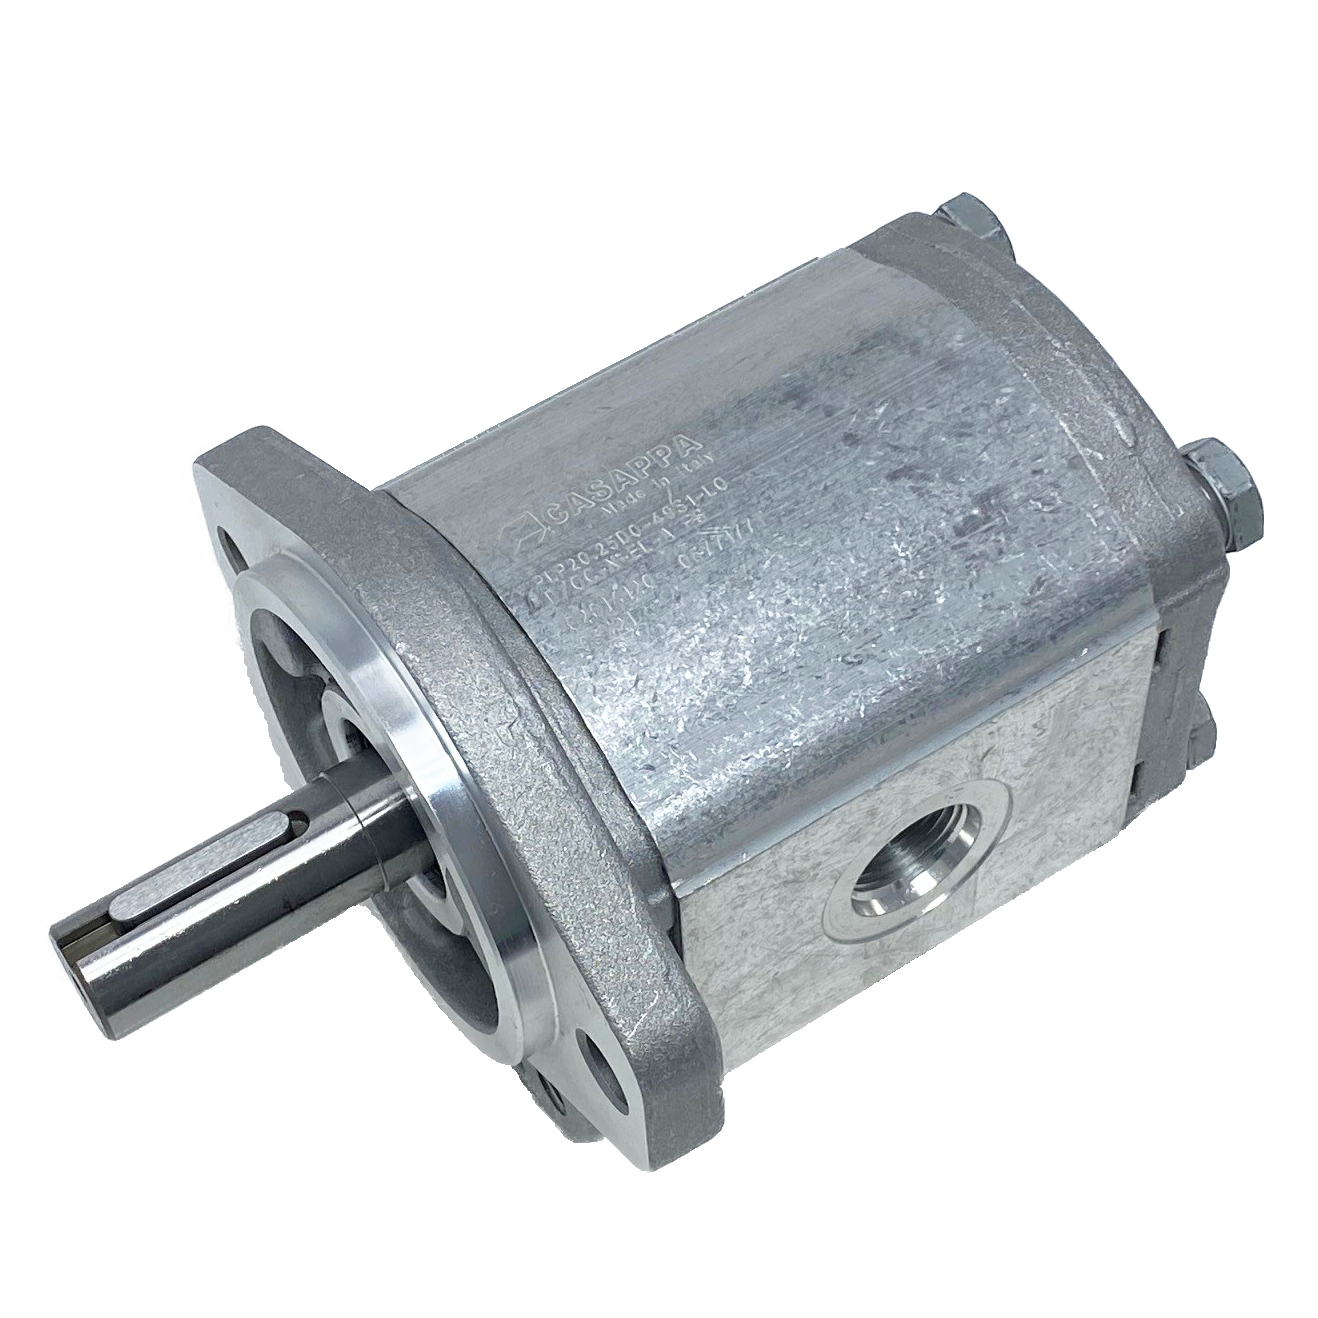 PHP20.25D0-49S9-LOG/OC-N-EL : Casappa Polaris Gear Pump, 26.42cc, 3335psi Rated, 3000RPM, CW, 3/4" Bore x 3/16" Key Shaft, SAE A 2-Bolt Flange, 1.25" #20 SAE Inlet, 0.625 (5/8") #10 SAE Outlet, Cast Iron Body, Aluminum Flange